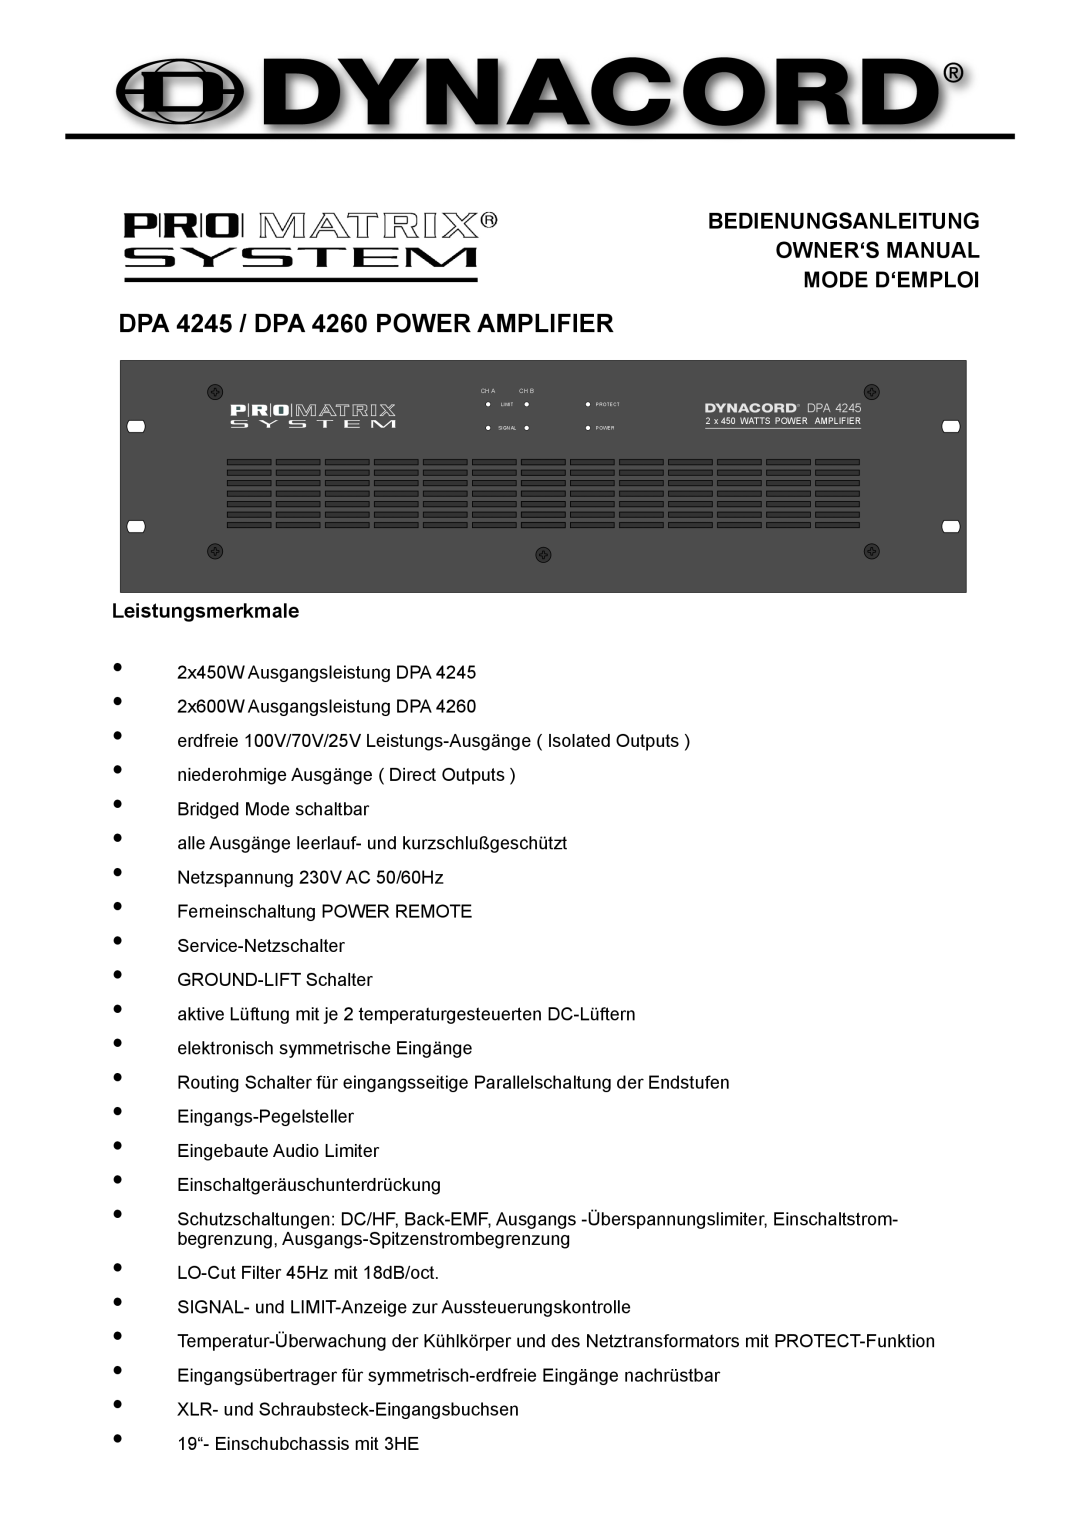 Dynacord owner manual DPA 4245 / DPA 4260 POWER AMPLIFIER, Bedienungsanleitung Owner‘S Manual Mode D‘Emploi 